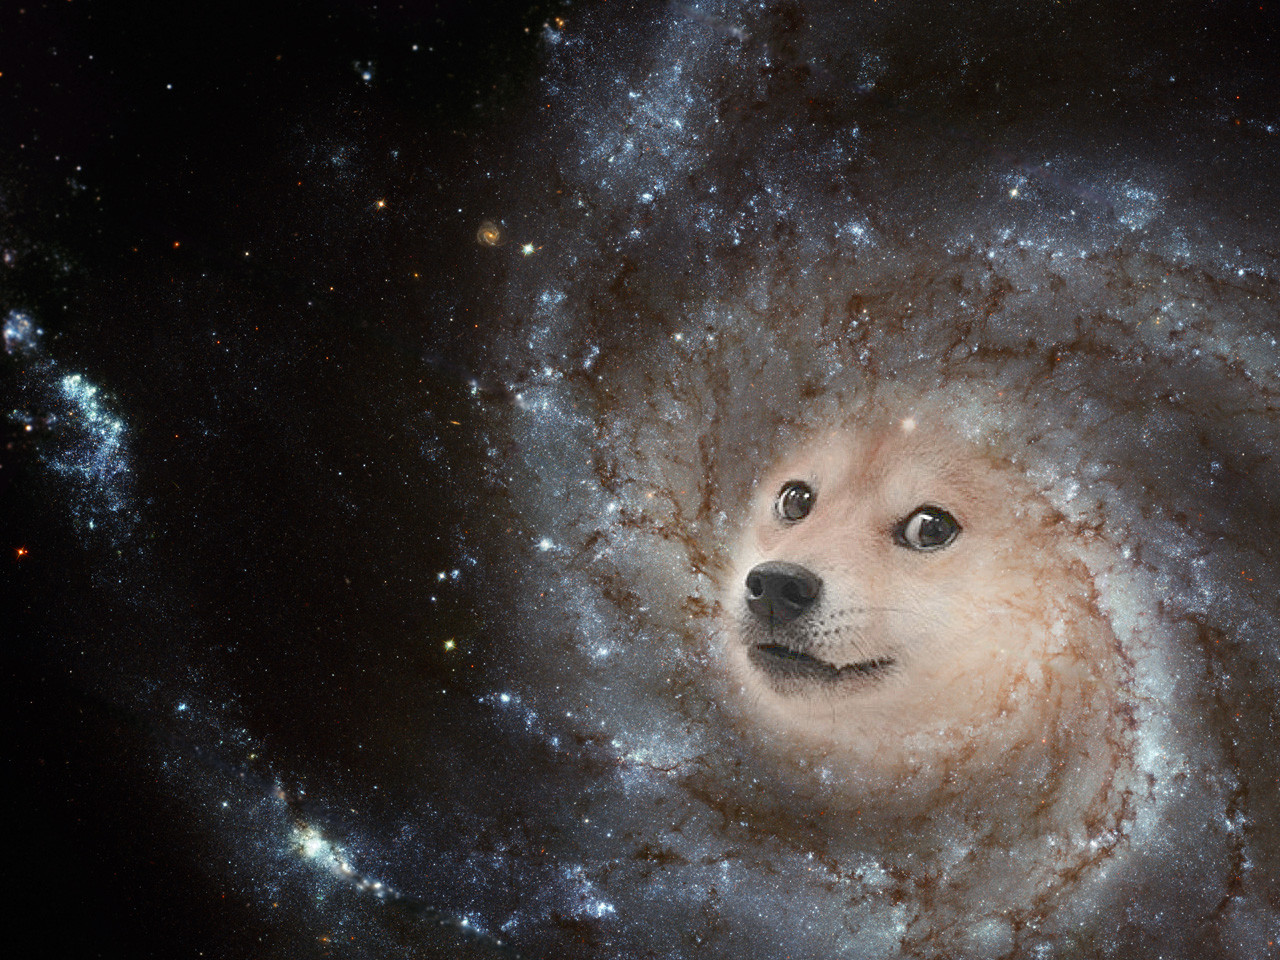 Doge Galaxy